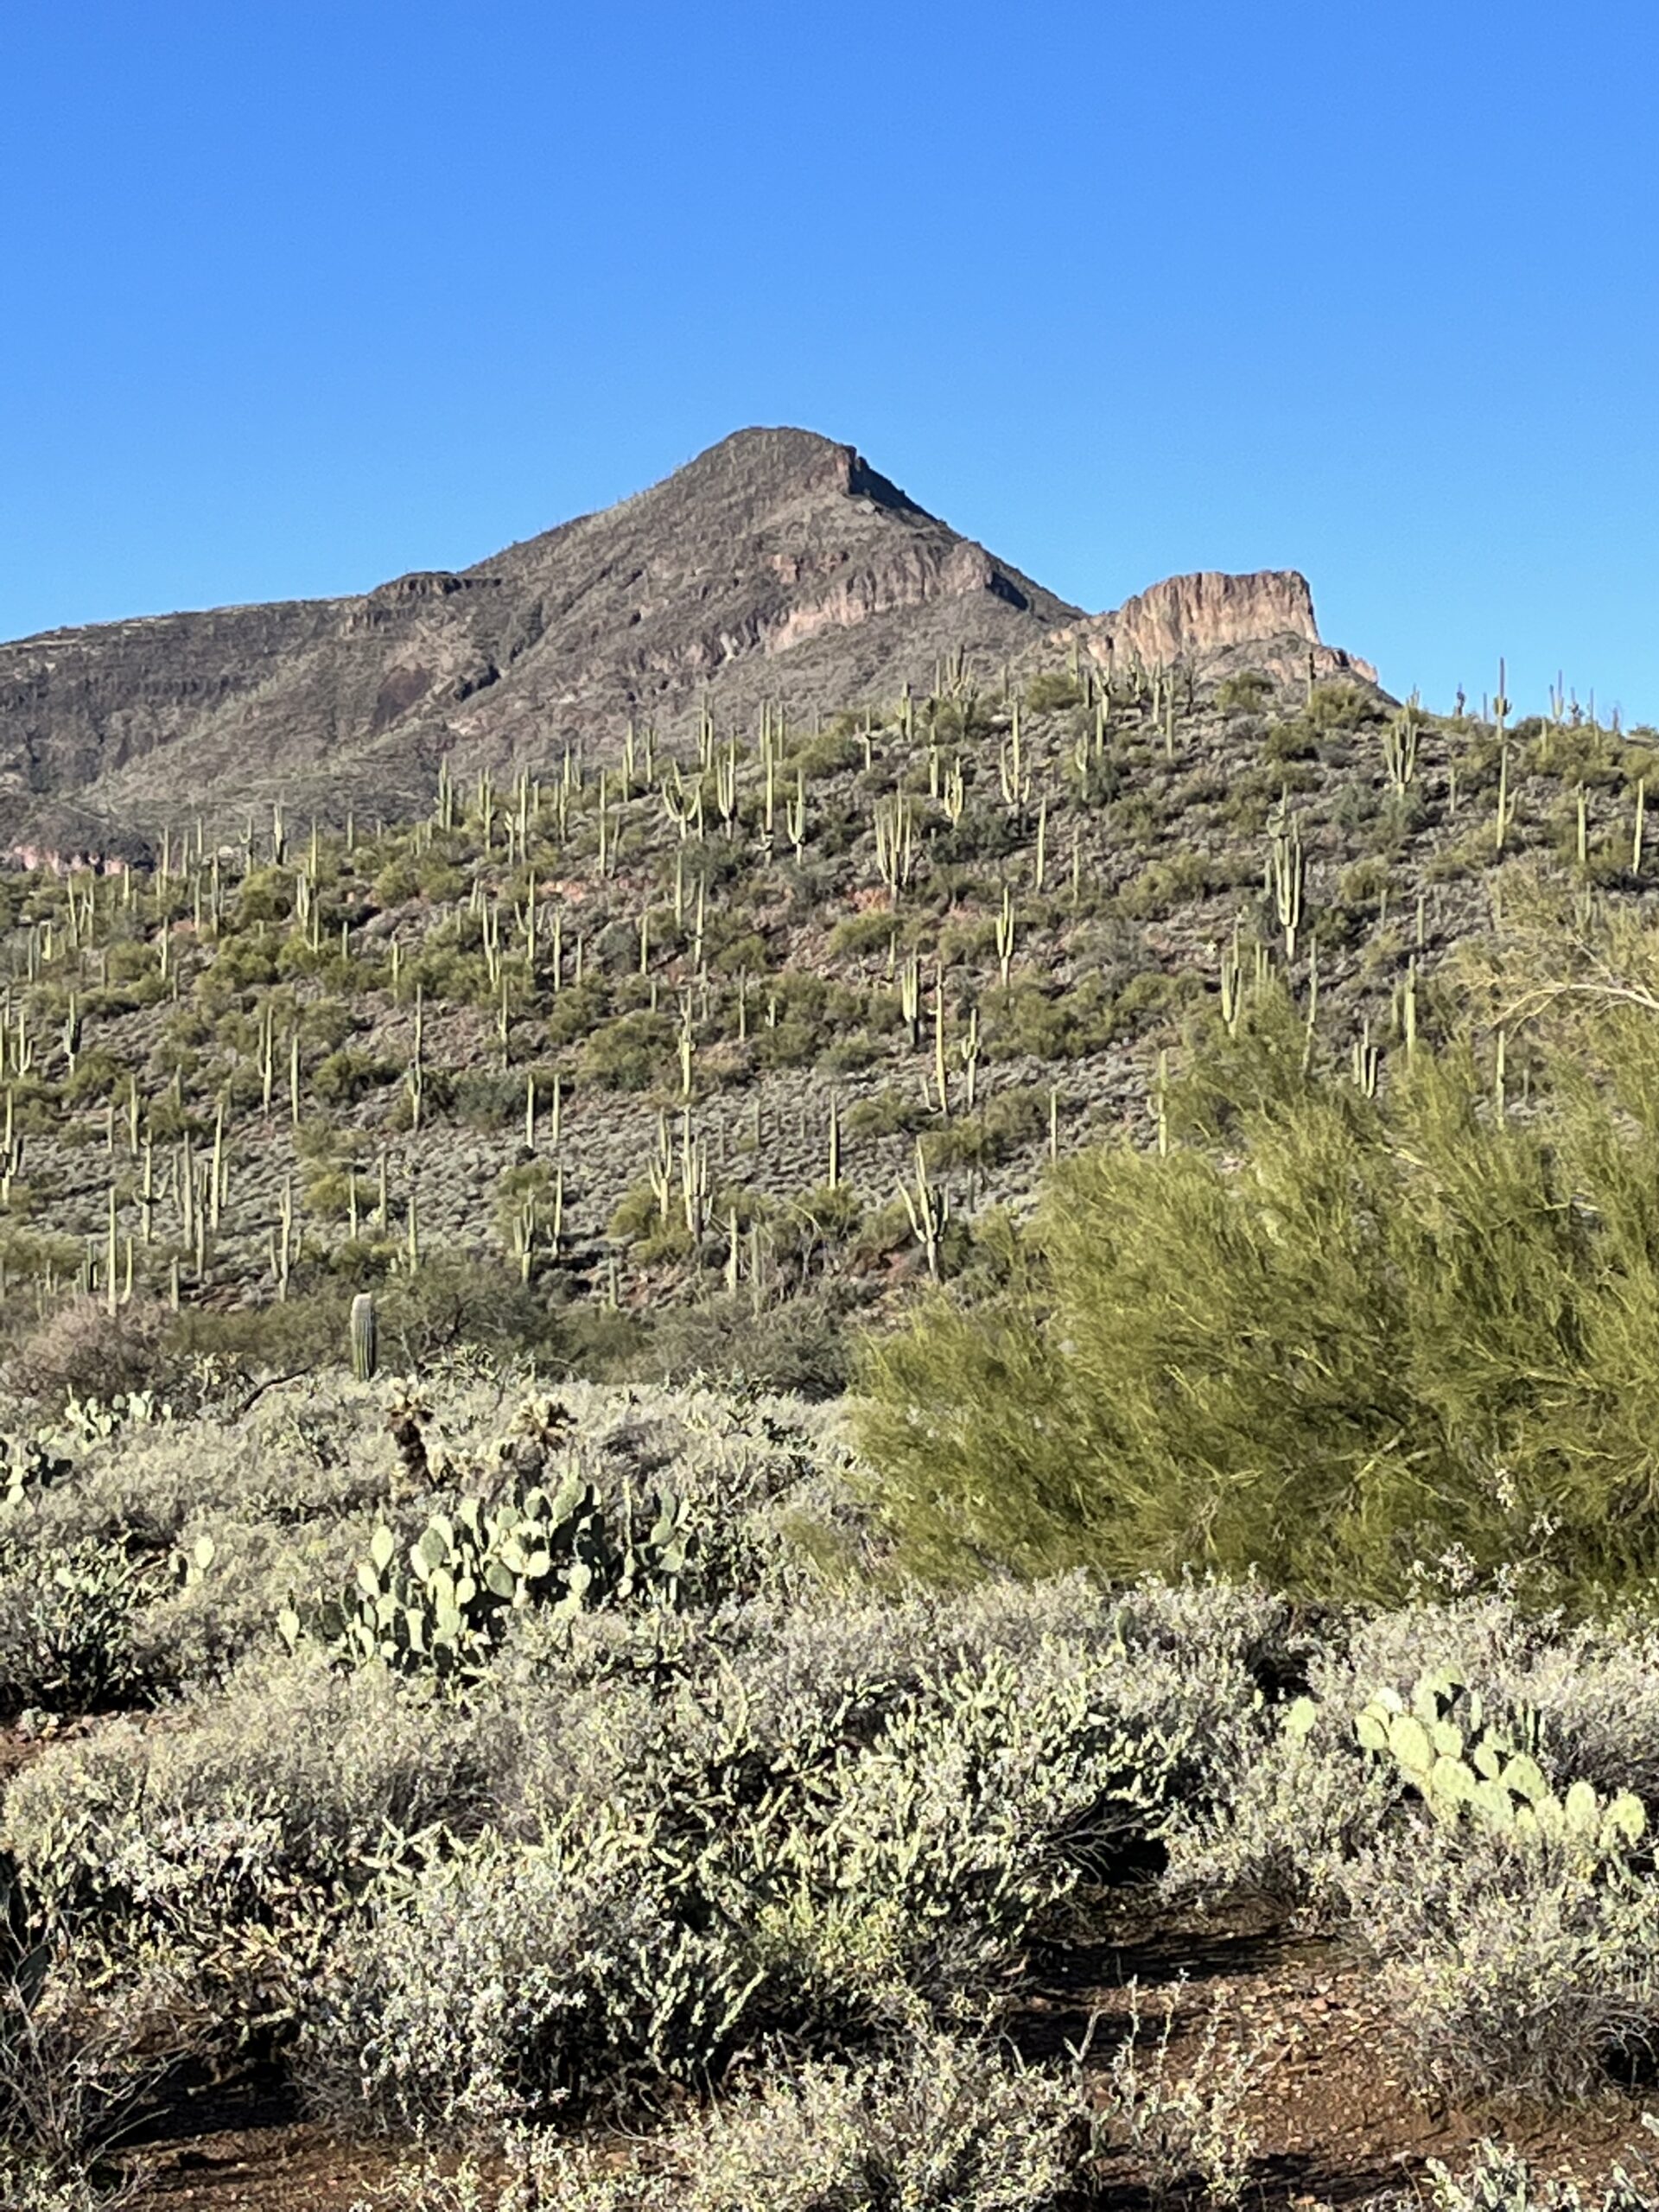 The best hike near Phoenix includes trails around Elephant Mountain.